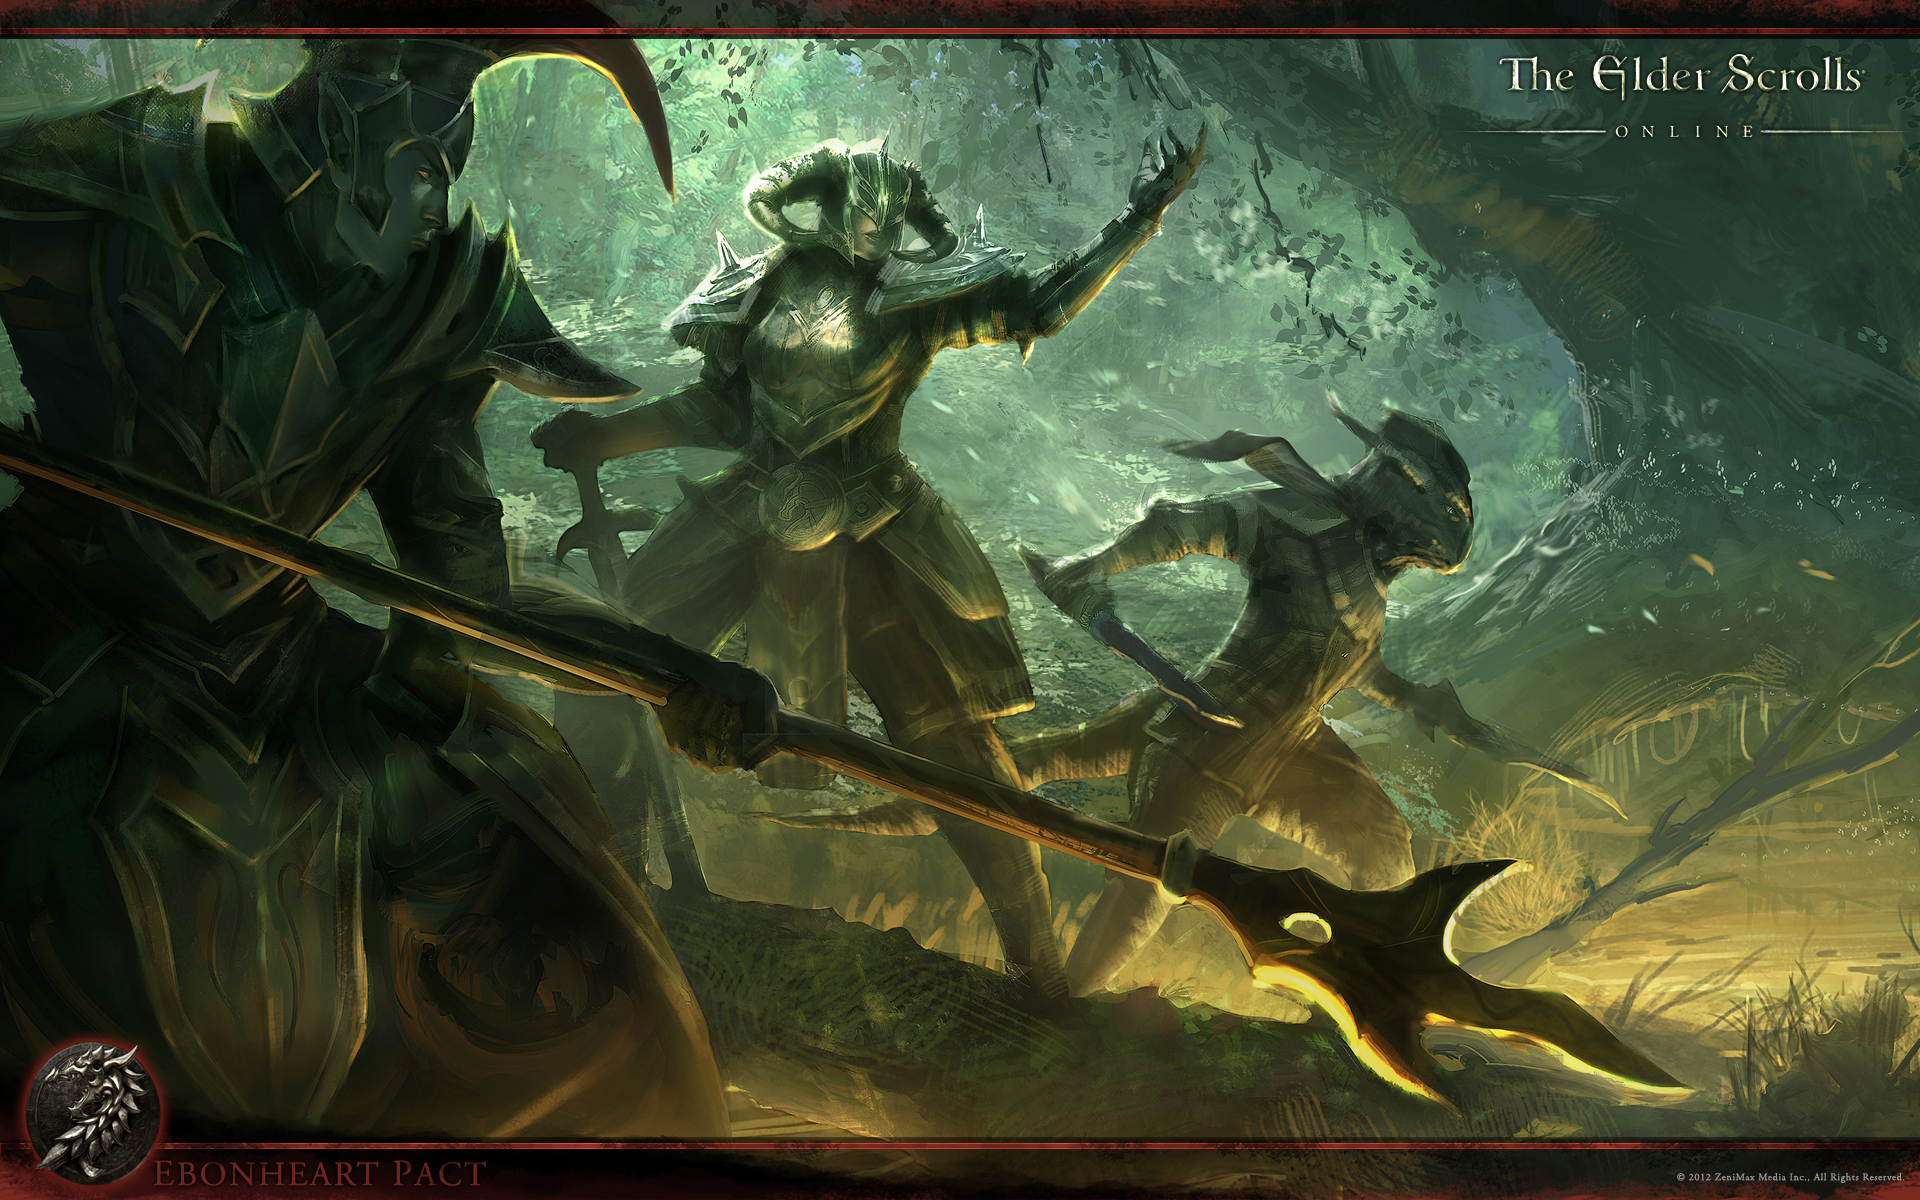 General 1920x1200 The Elder Scrolls Online fantasy art forest fantasy weapon PC gaming 2012 (Year) video game art digital art